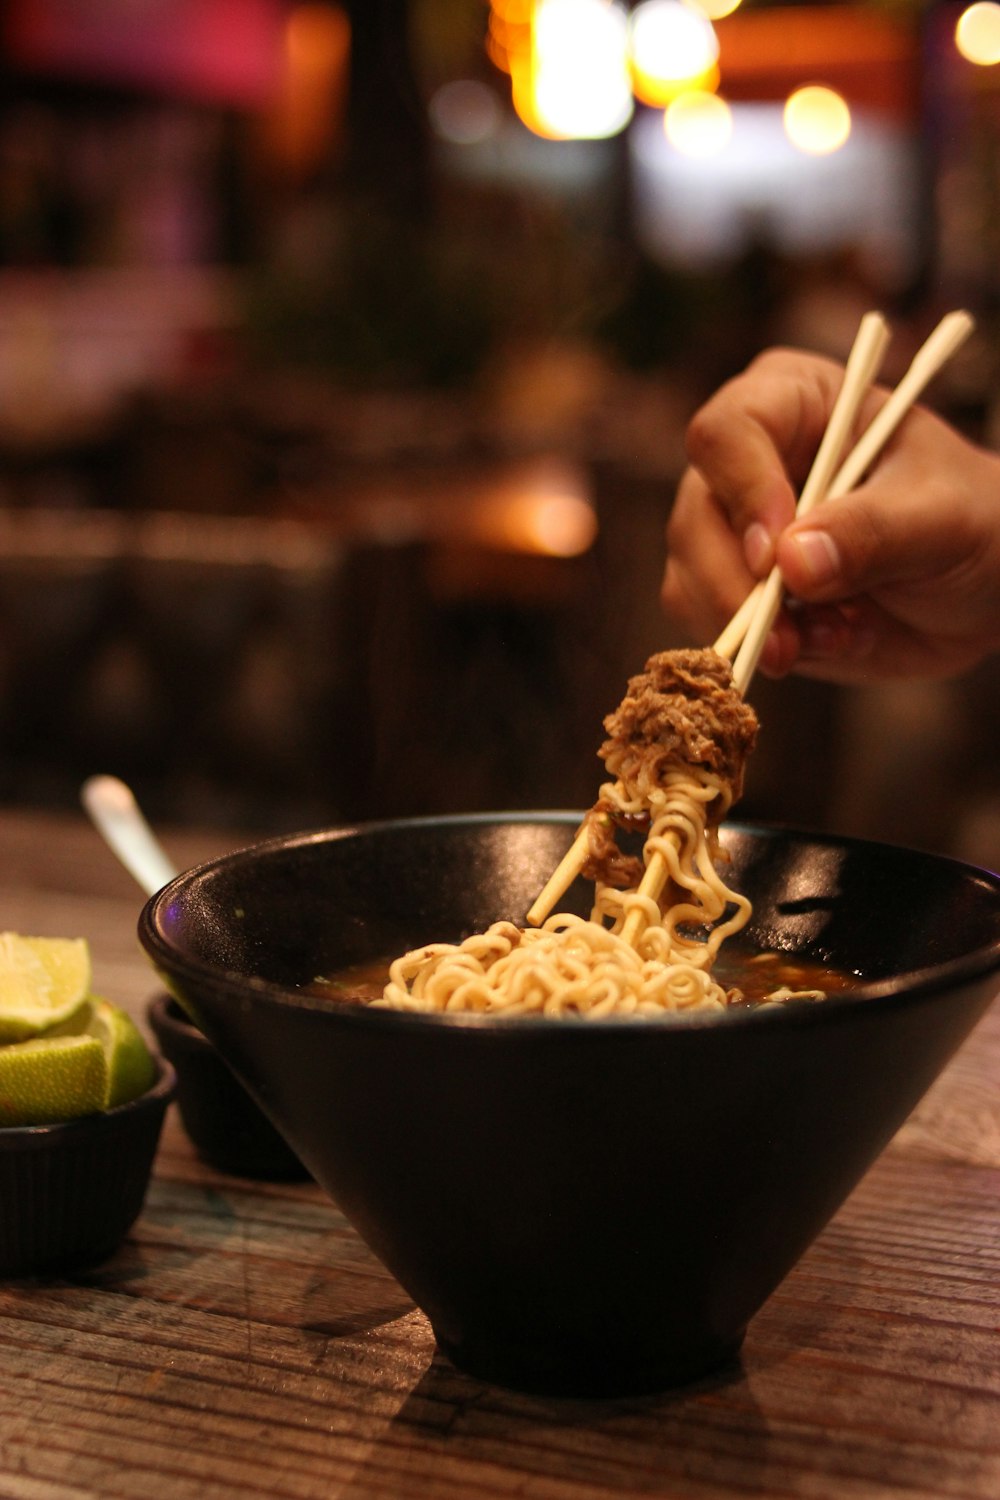 a hand holding chopsticks over a bowl of food